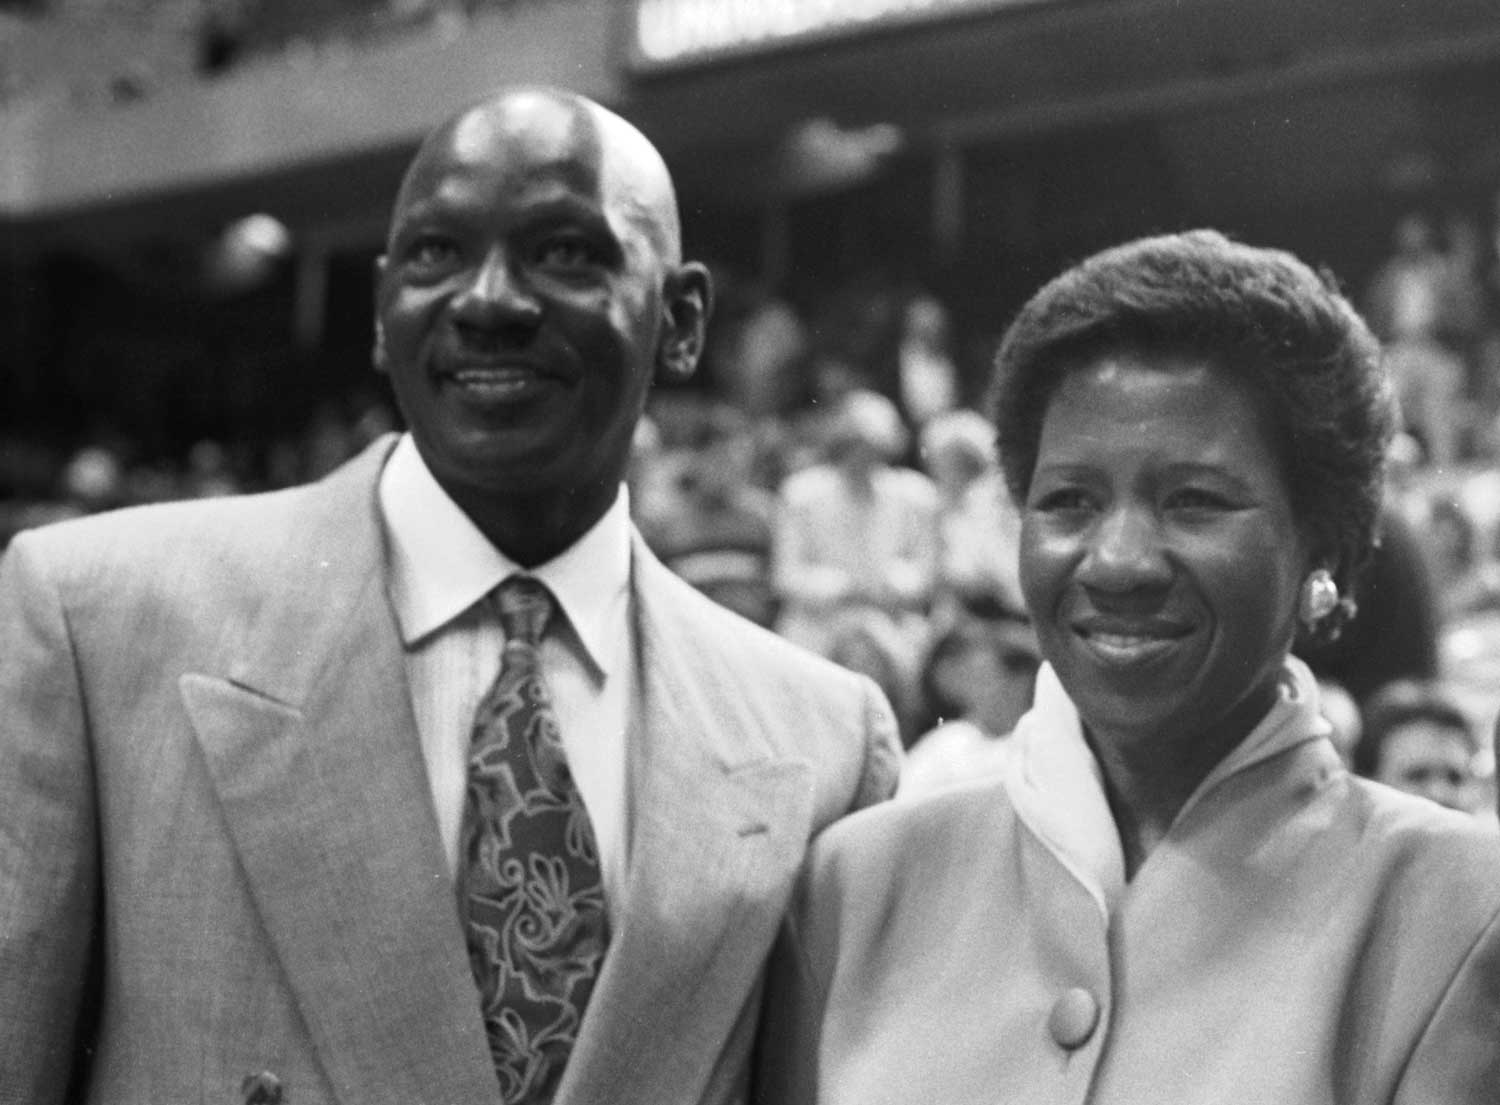 Michael Jordan's Parents: James R. Jordan, Sr. and his wife Deloris Jordan